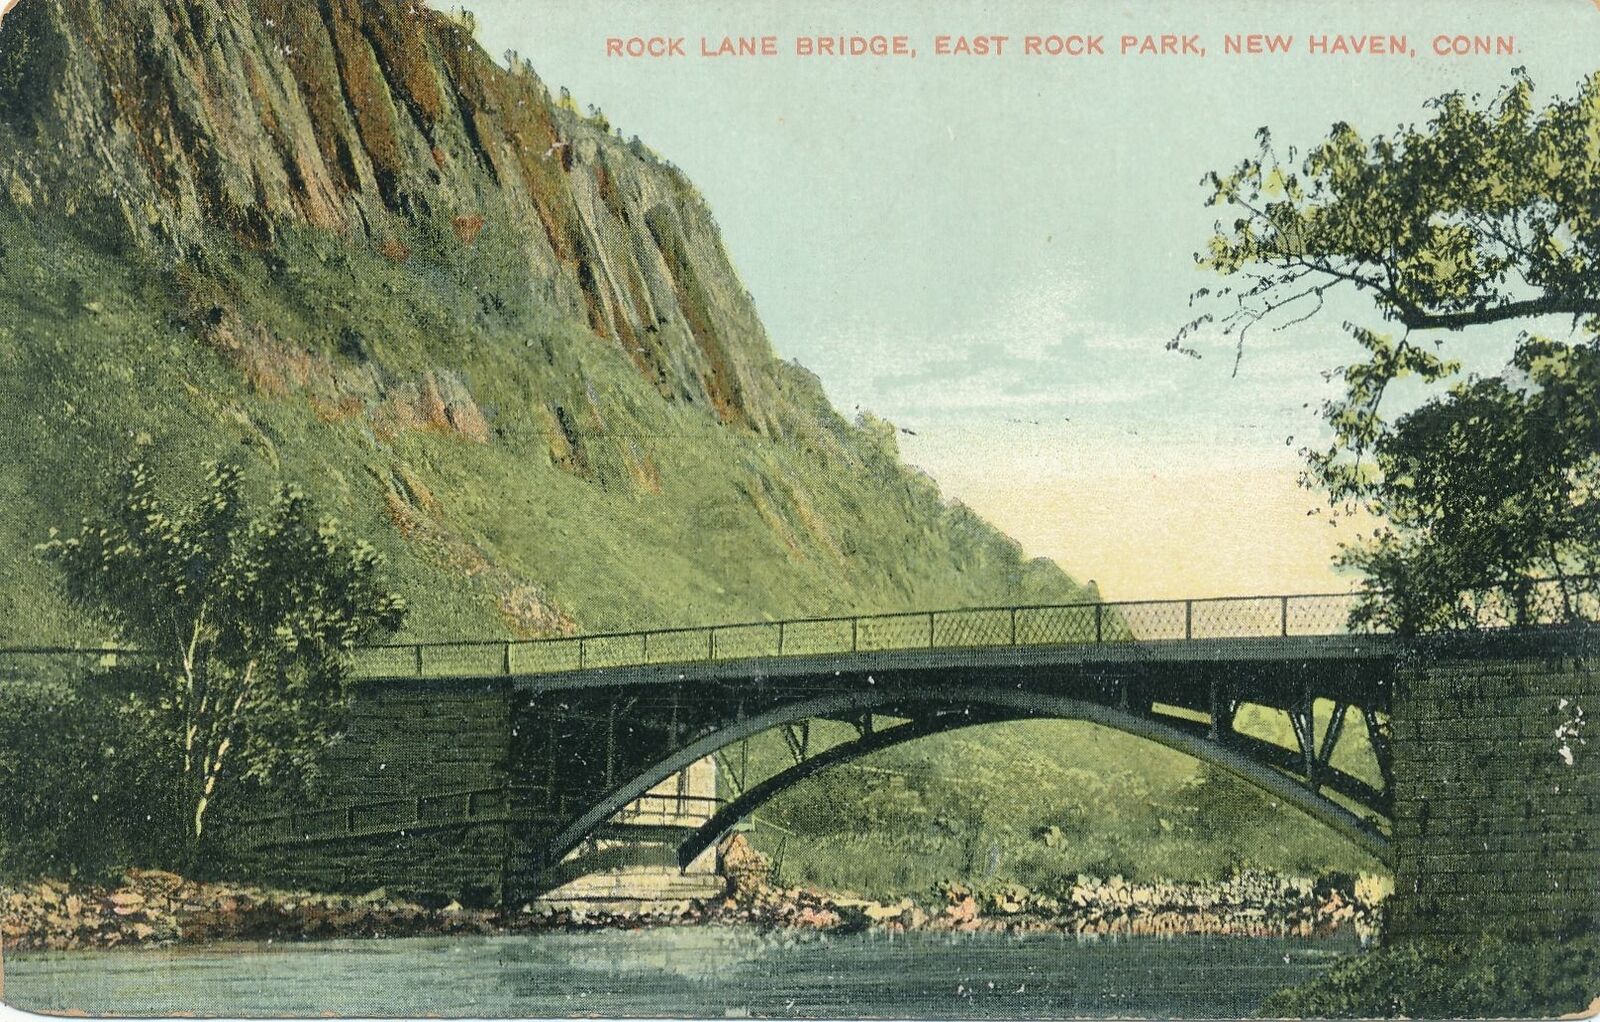 NEW HAVEN CT - East Rock Park Rock Lane Bridge